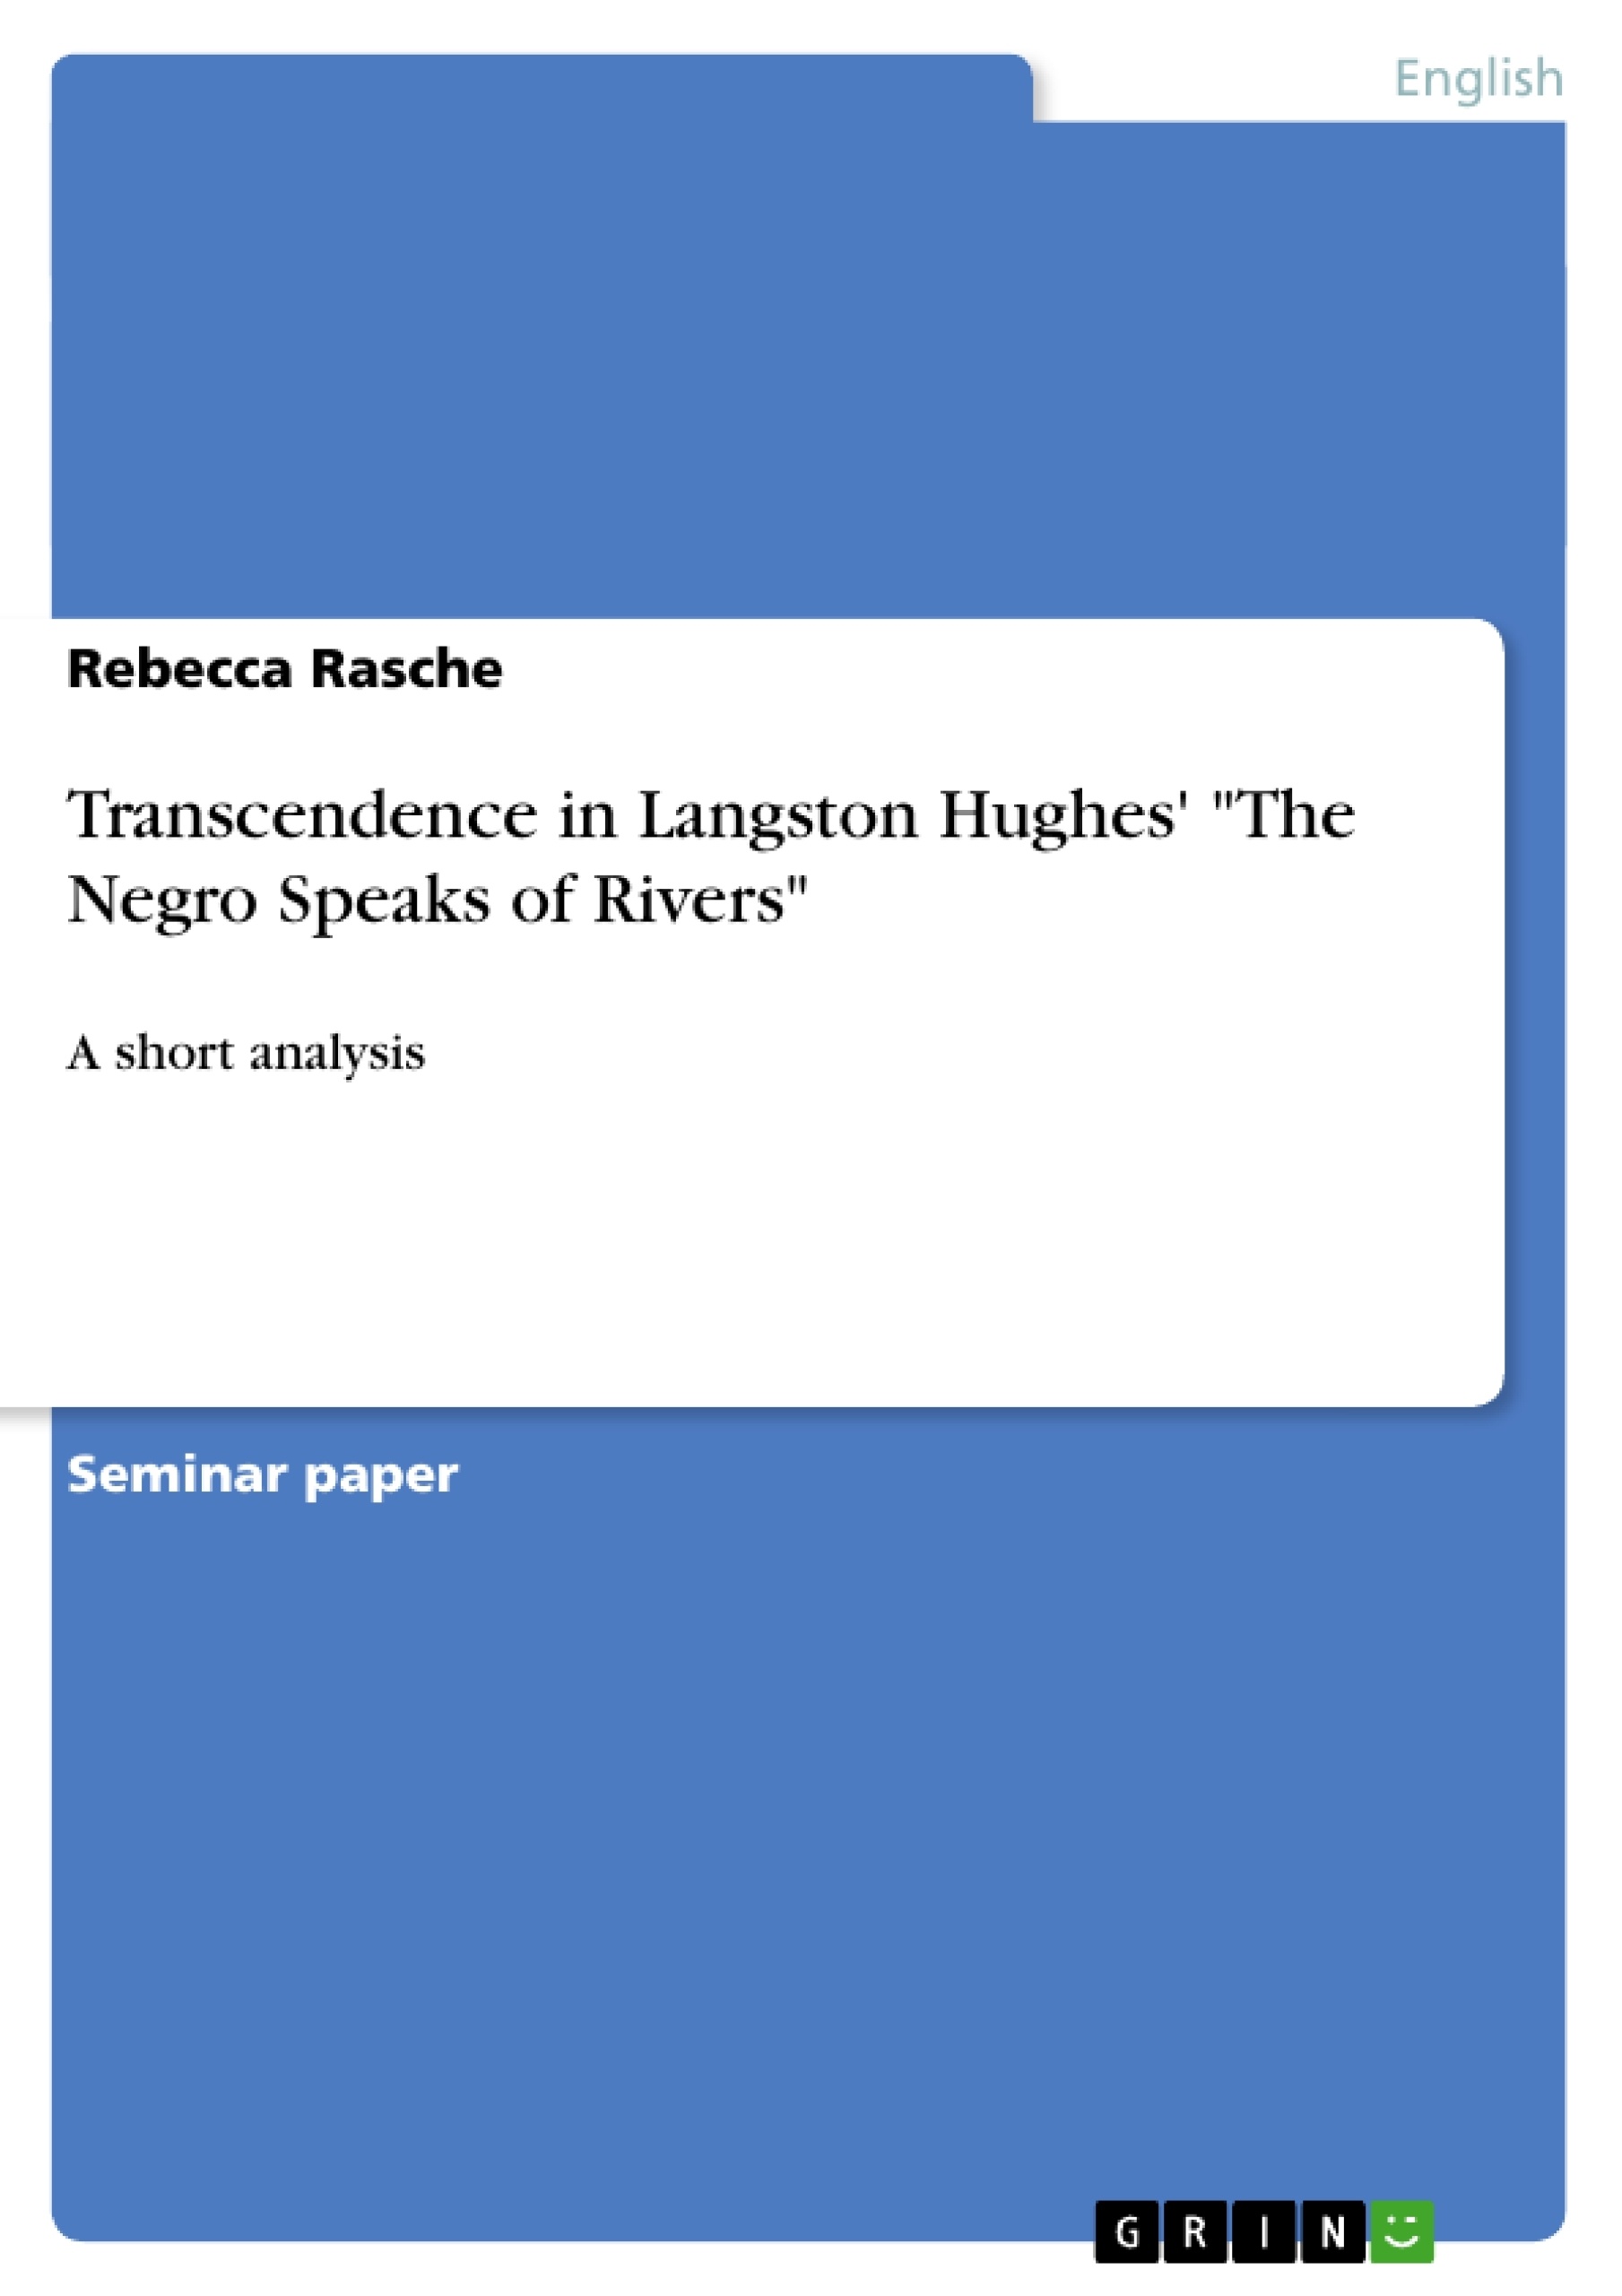 the negro speaks of rivers summary